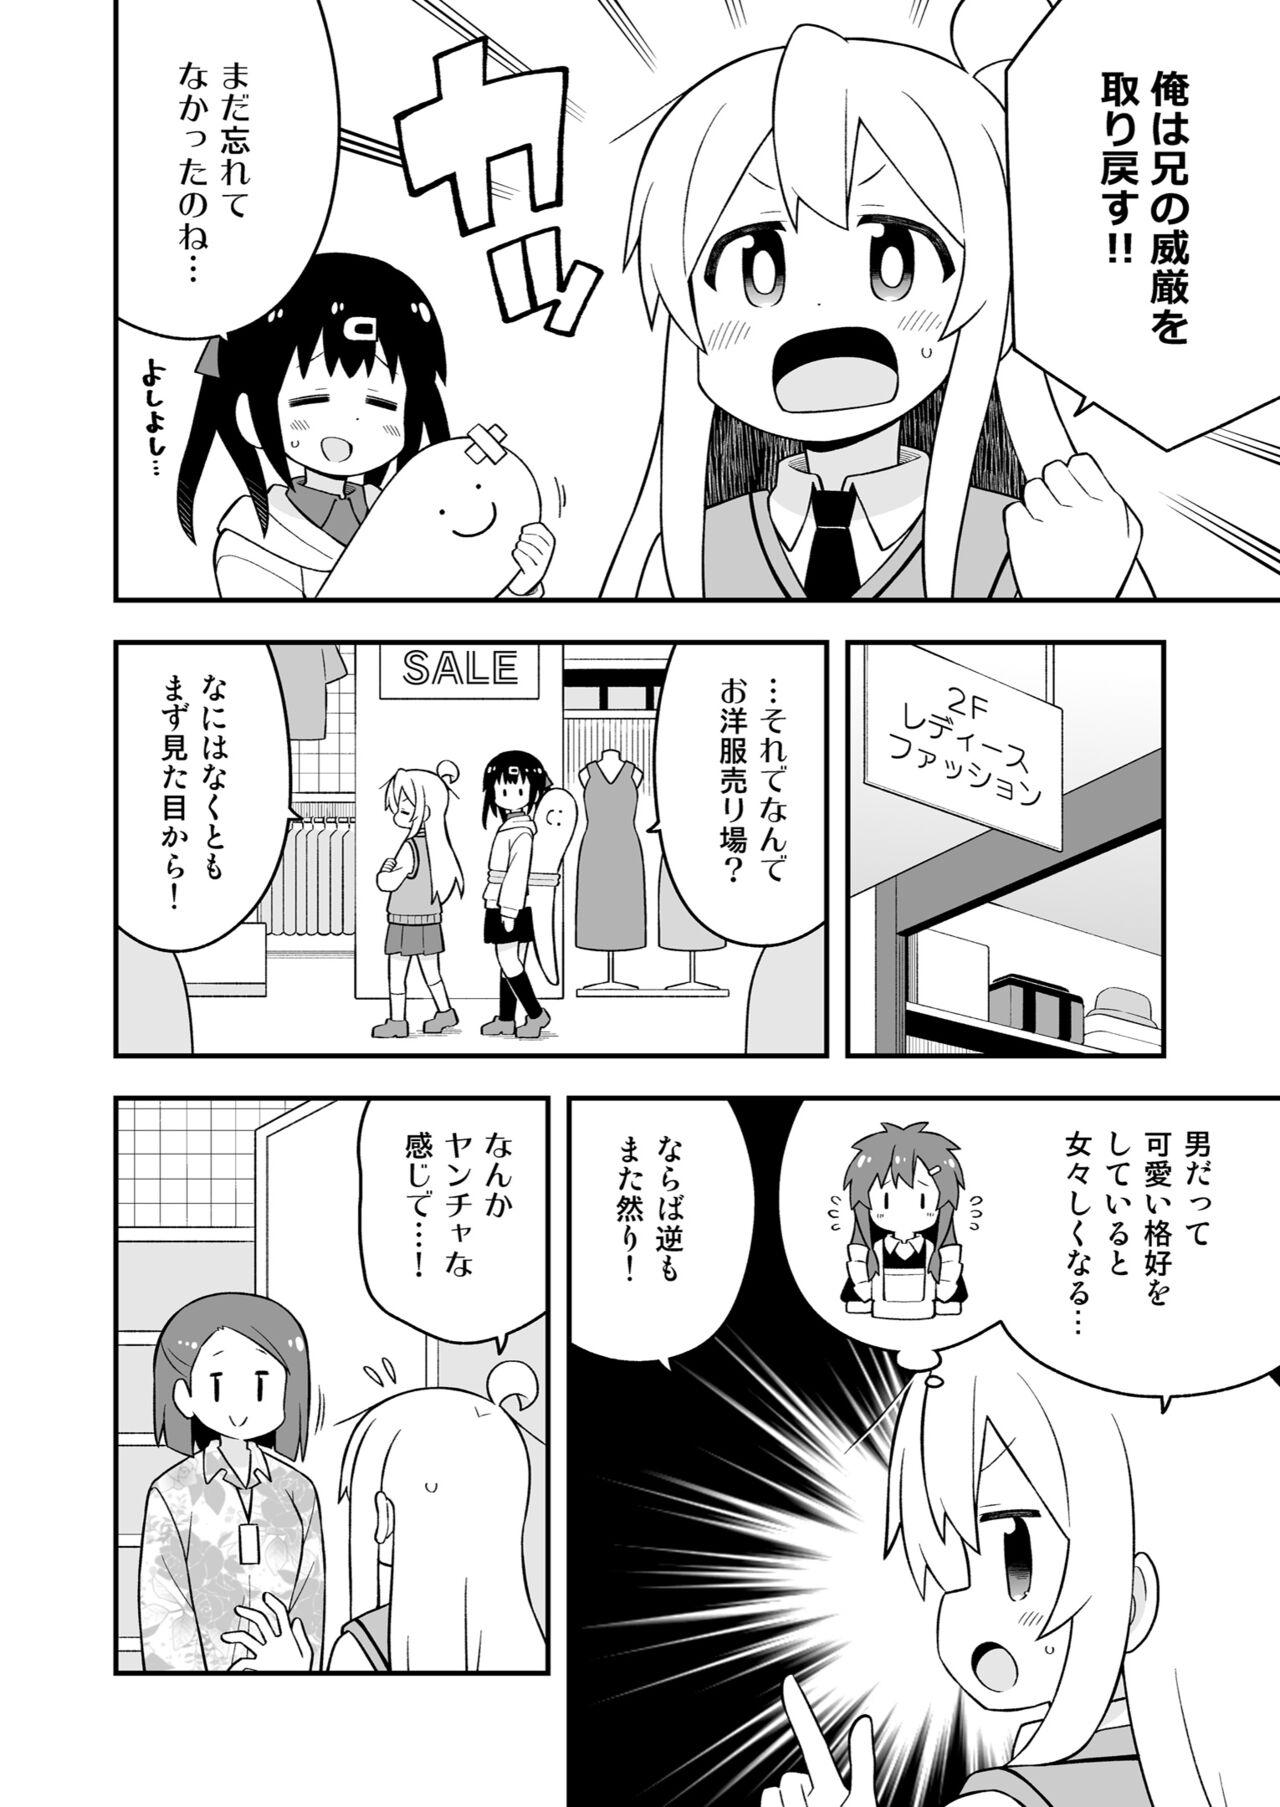 Soapy Massage Onii-chan wa Oshimai! 23 - Onii-chan wa oshimai Sapphic Erotica - Page 8